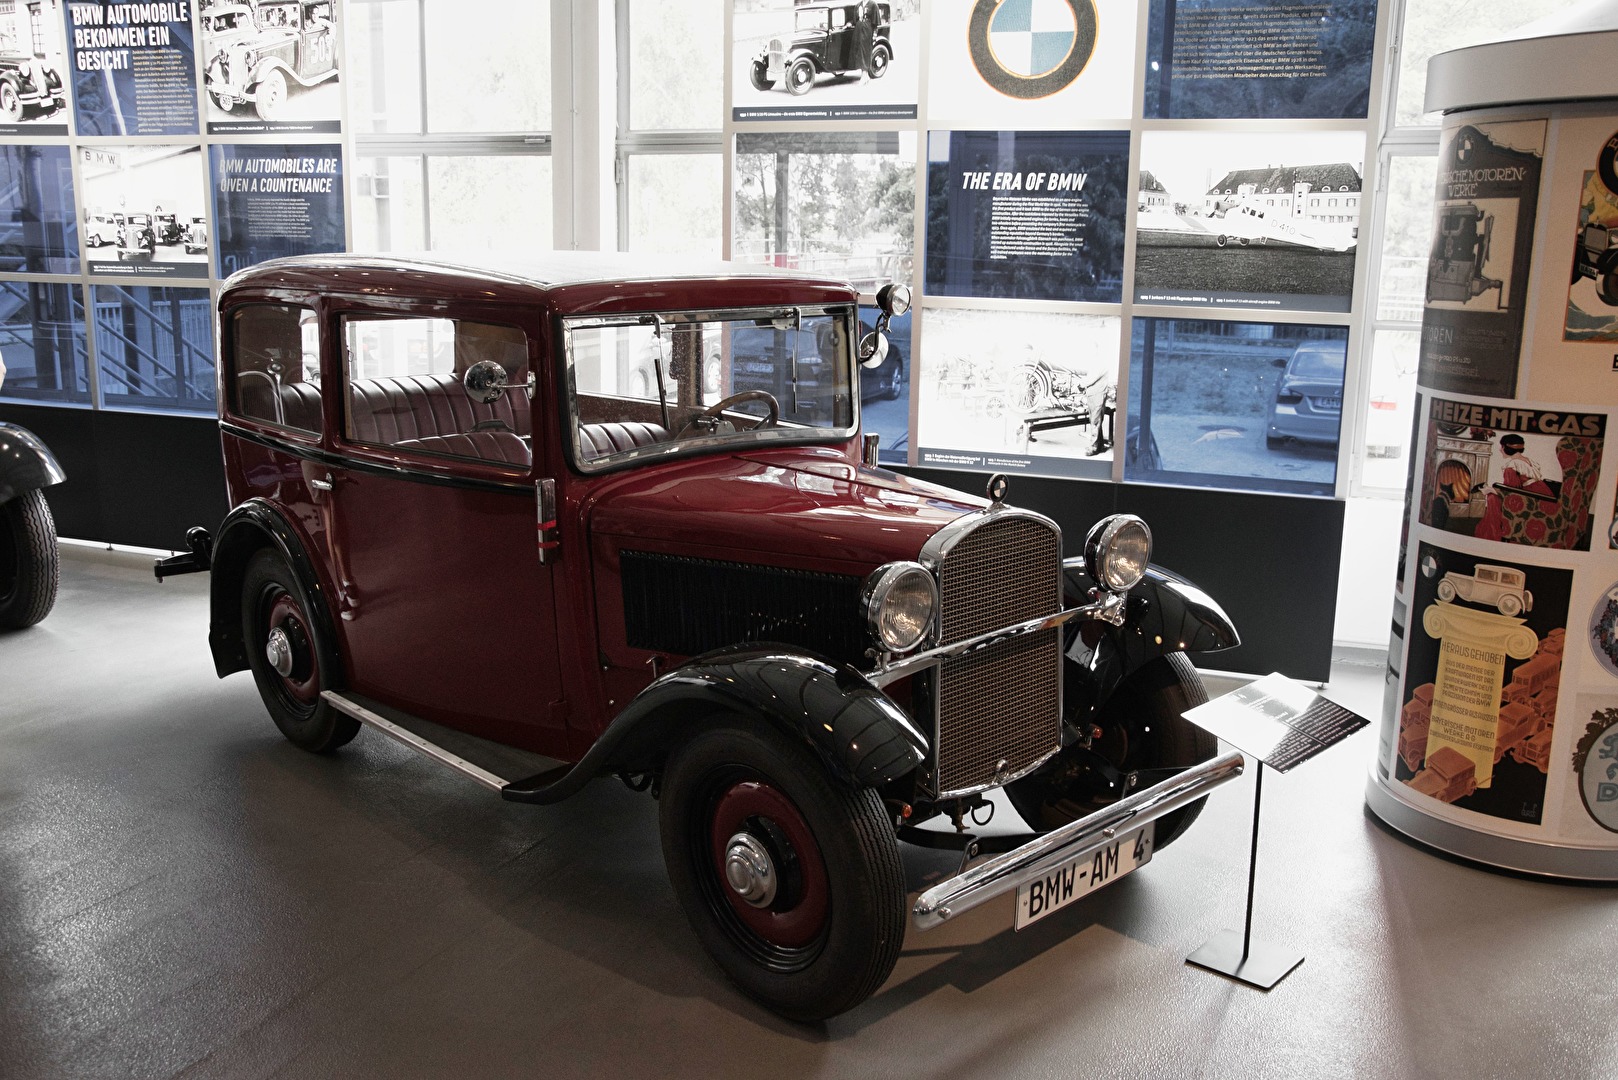 BMW AM 4 (1933) im Museum - Automobile Welt Eisenach